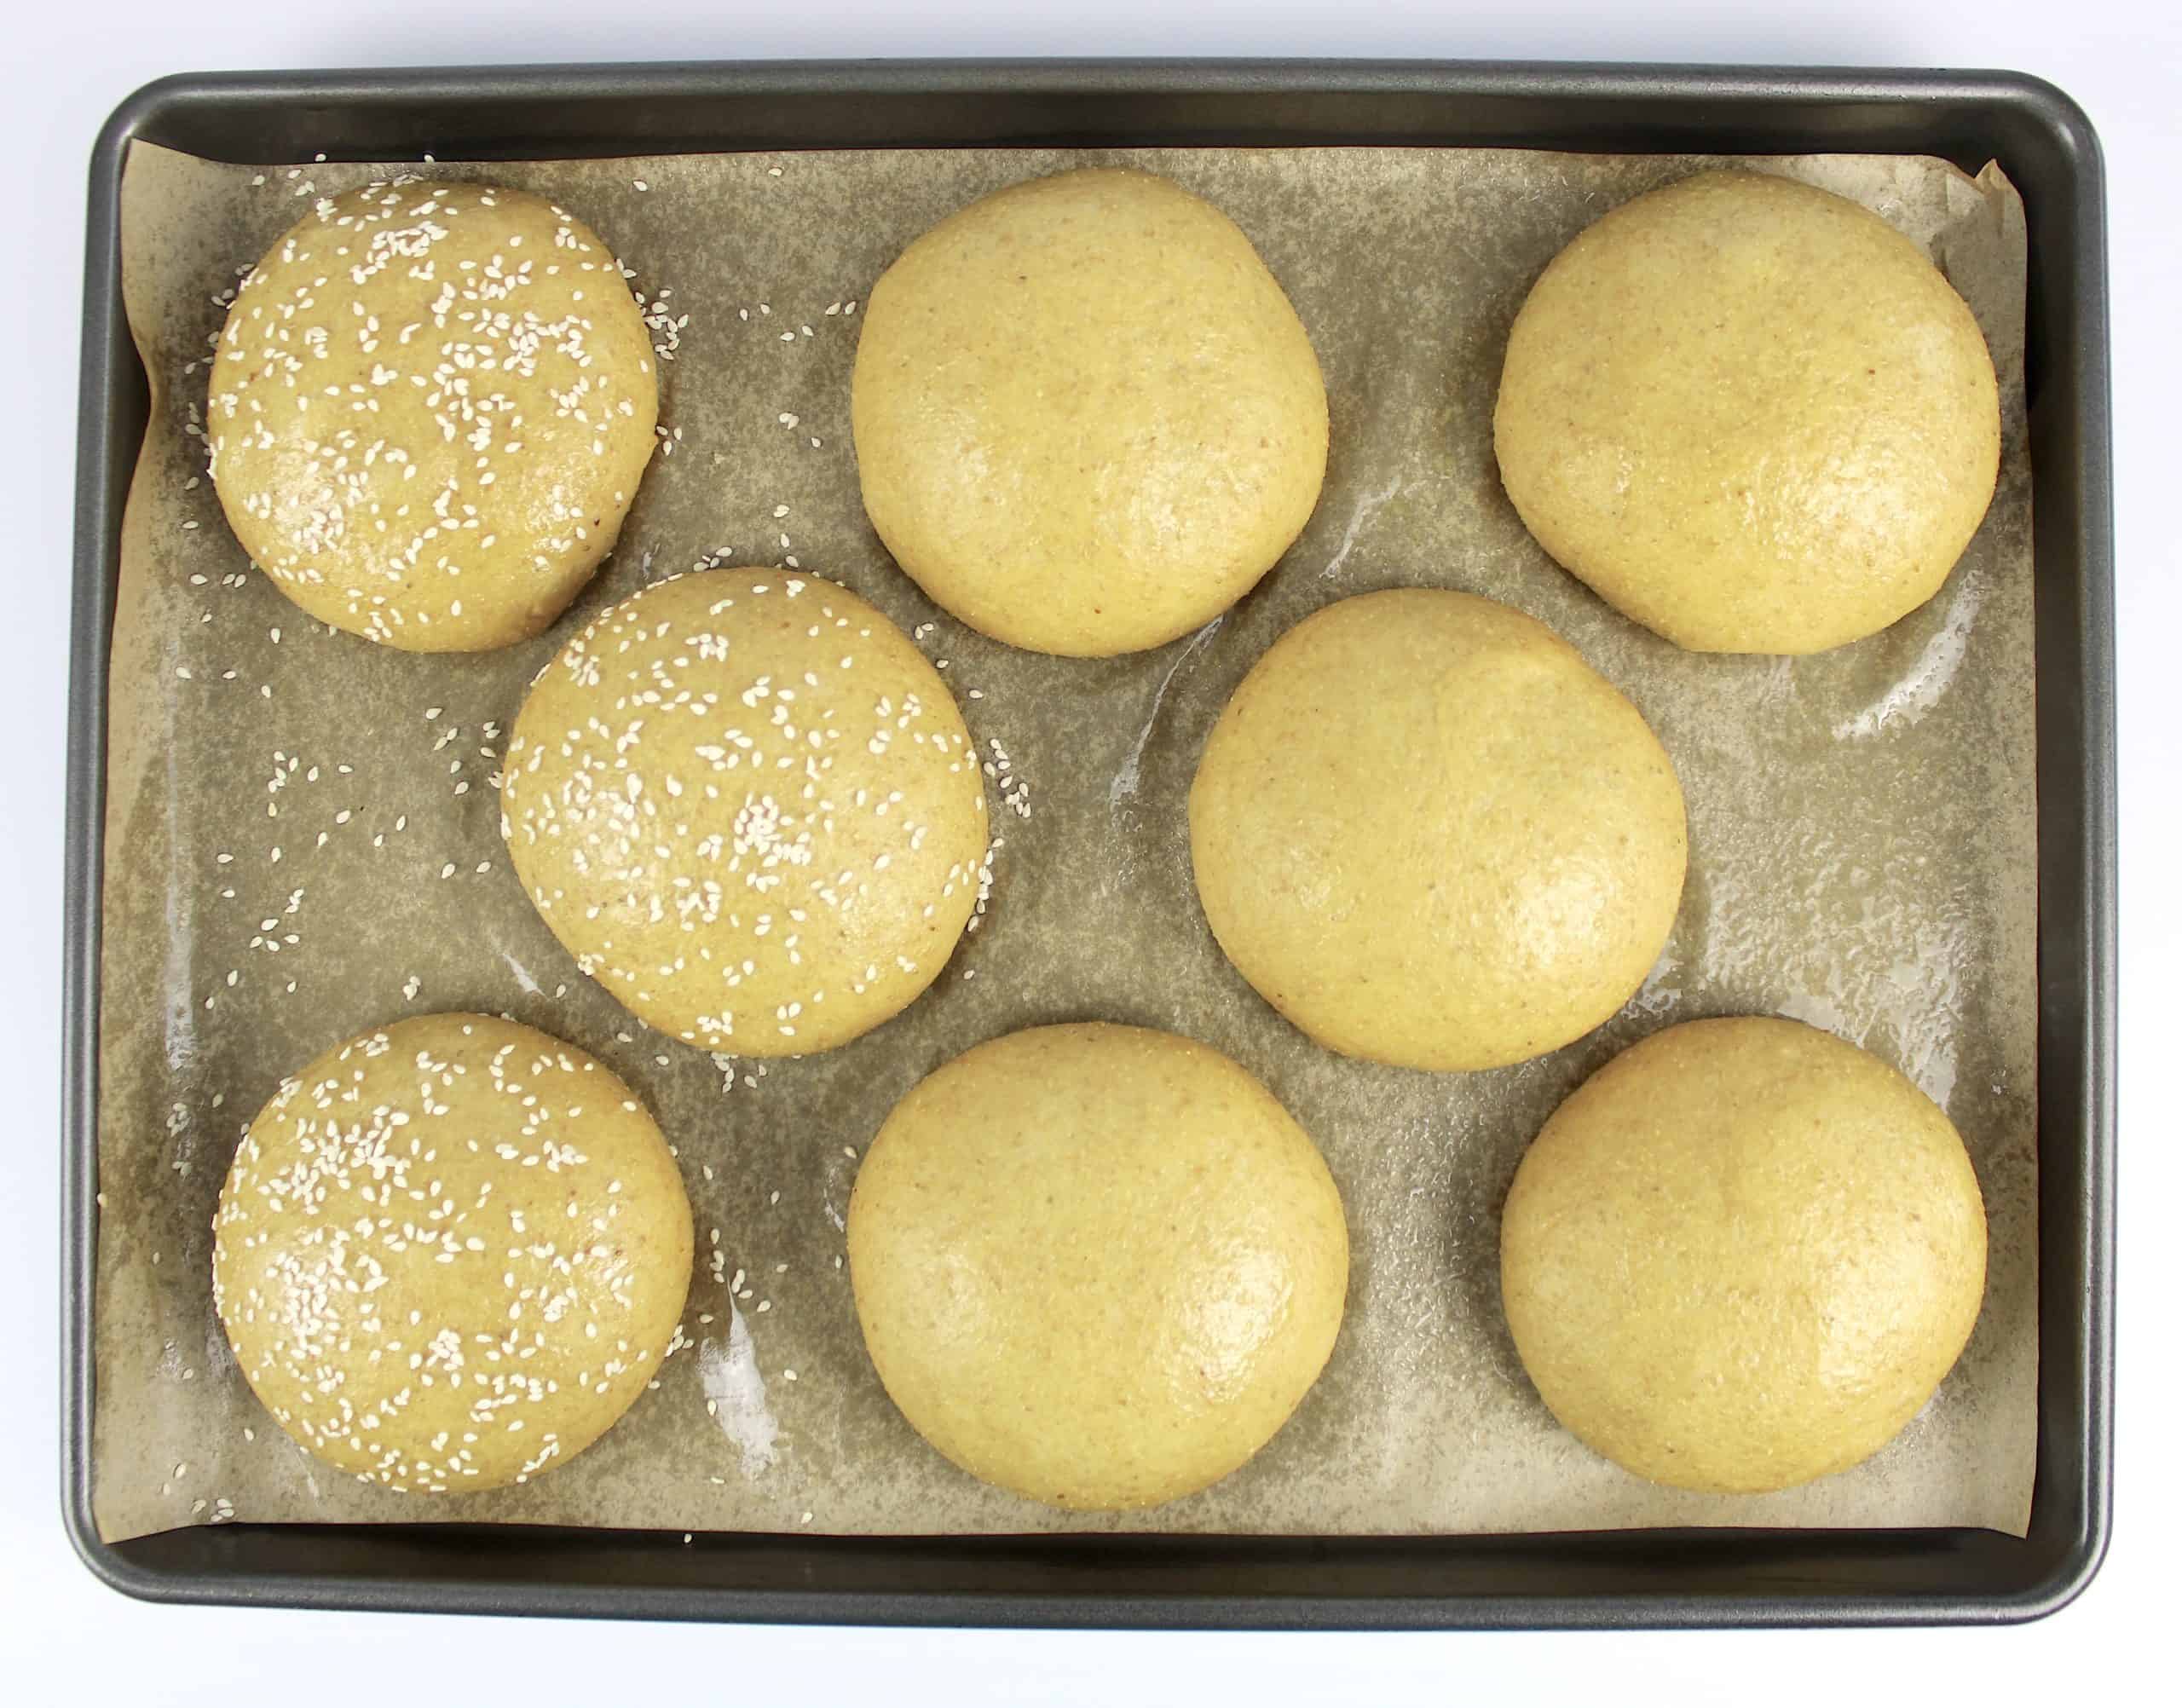 8 keto bun dough balls on parchment lined baking sheet